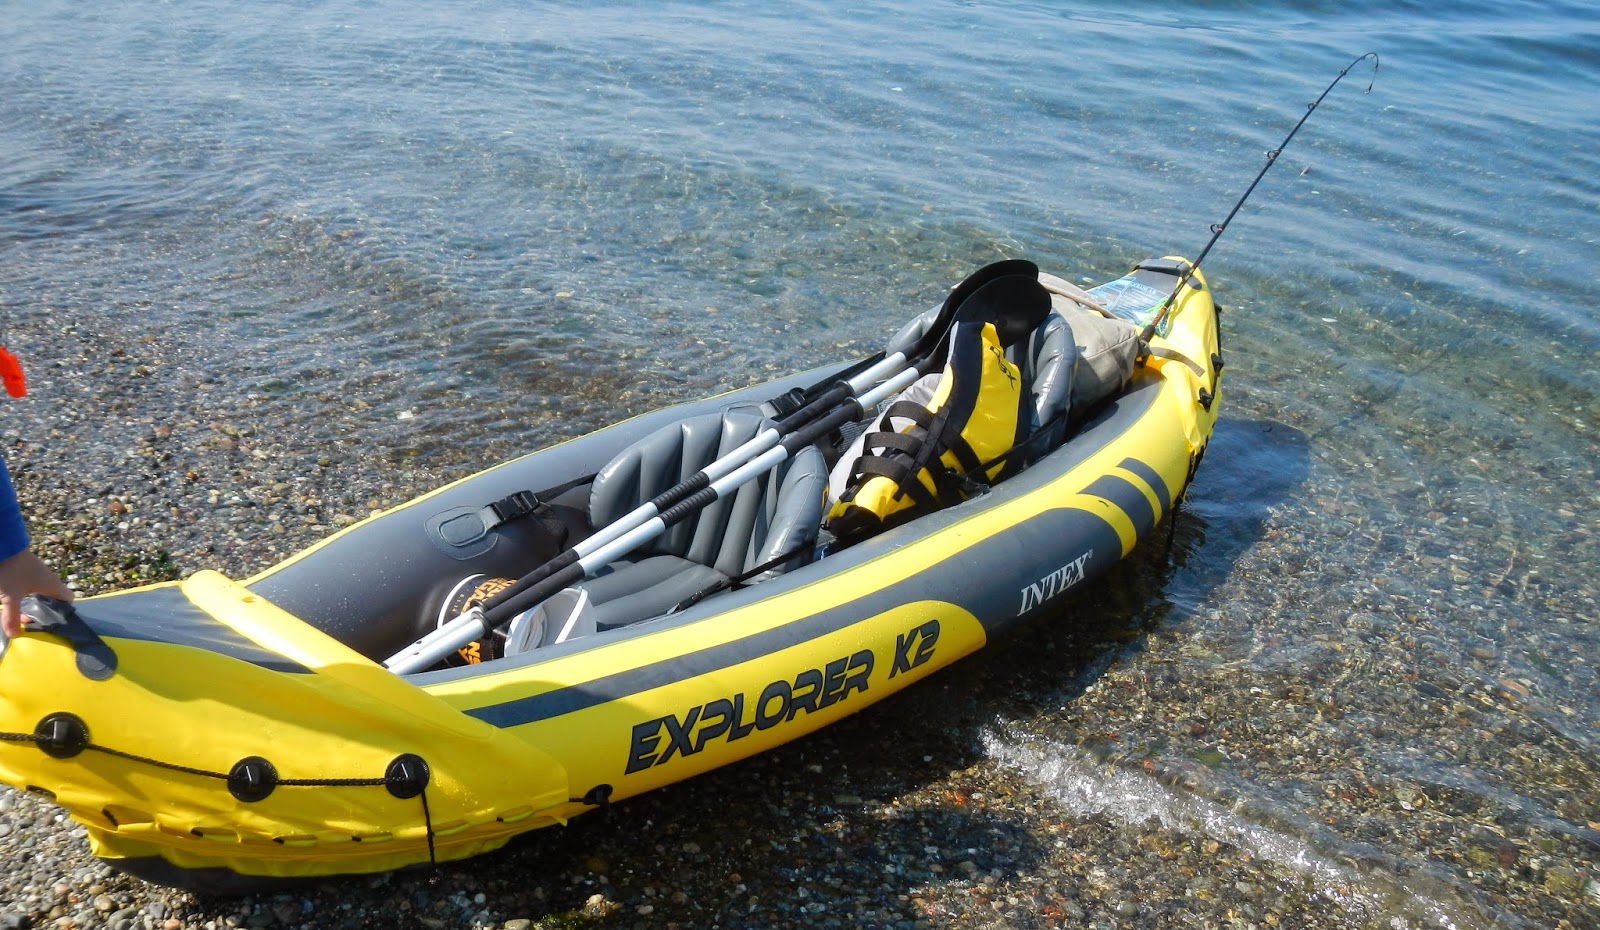 the banana boat: a review of the intex explorer k2 kayak